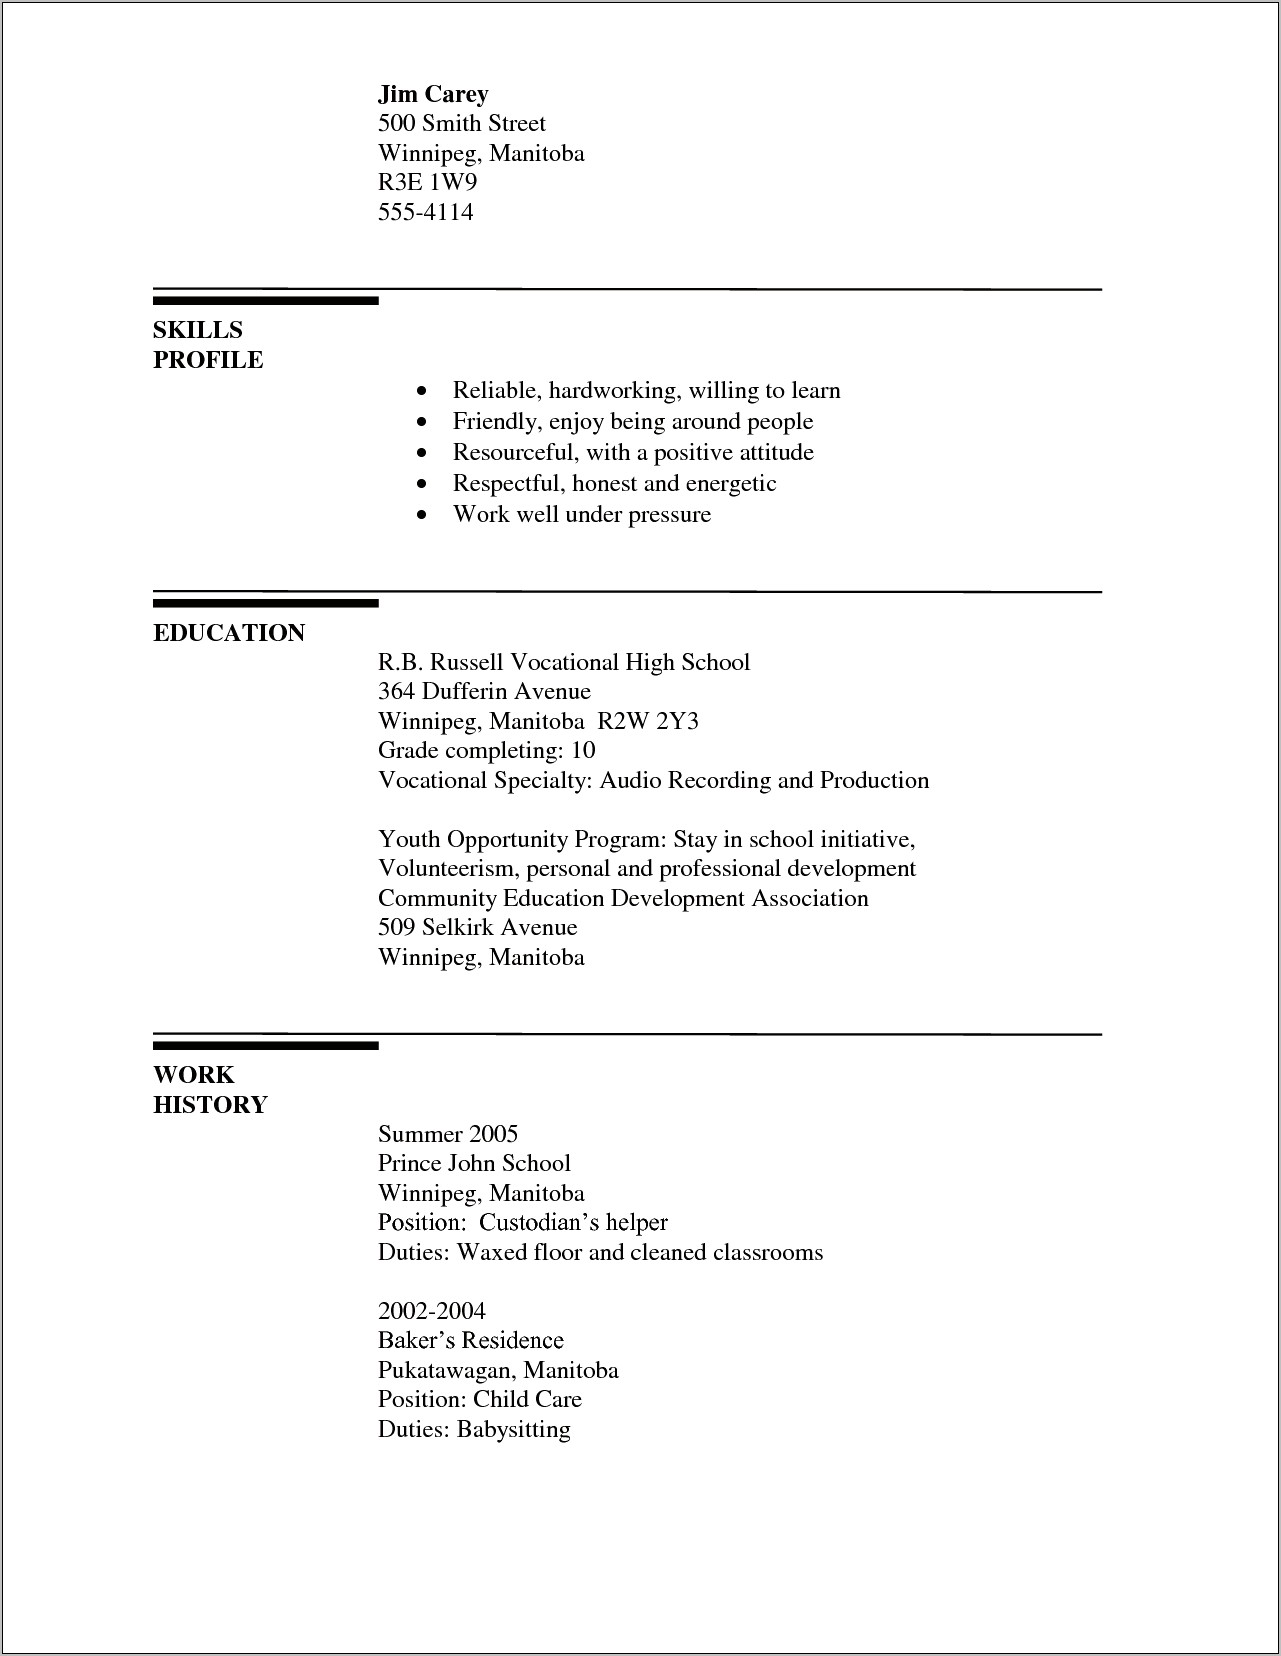 Resume Summary Sample For Custodian